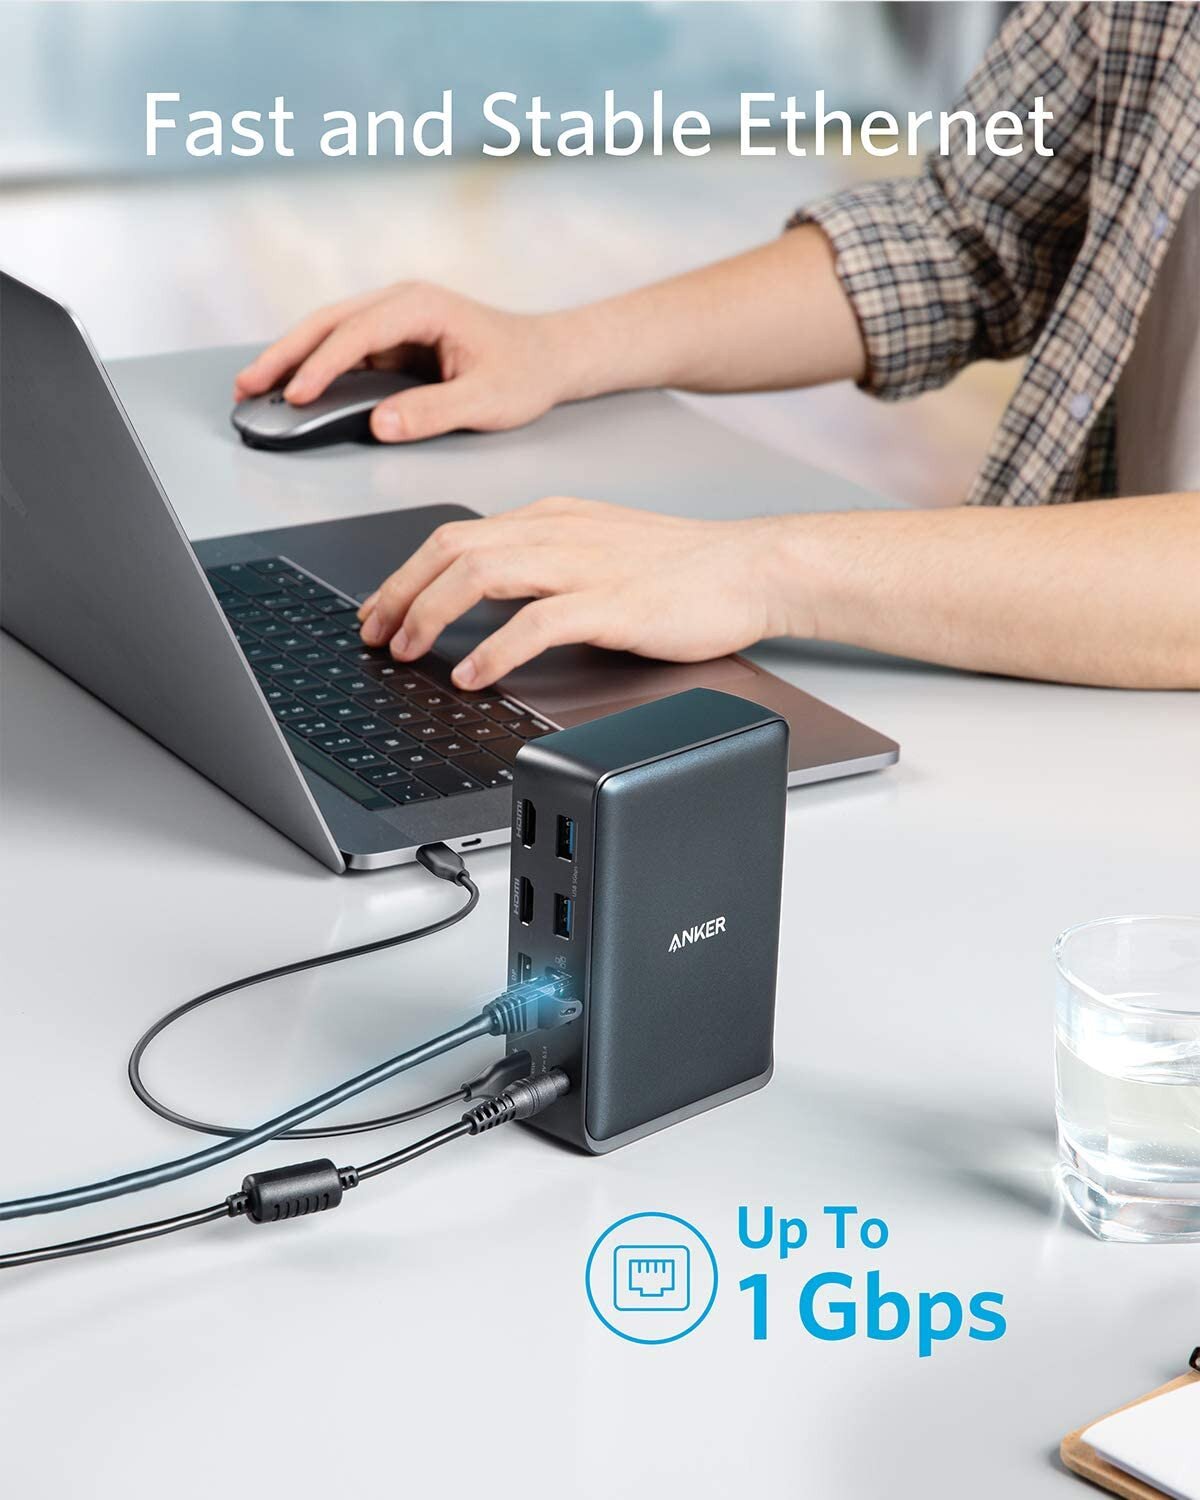 Buy Anker 575 USB-C Docking Station (13-in-1) online in UAE - Tejar.com UAE